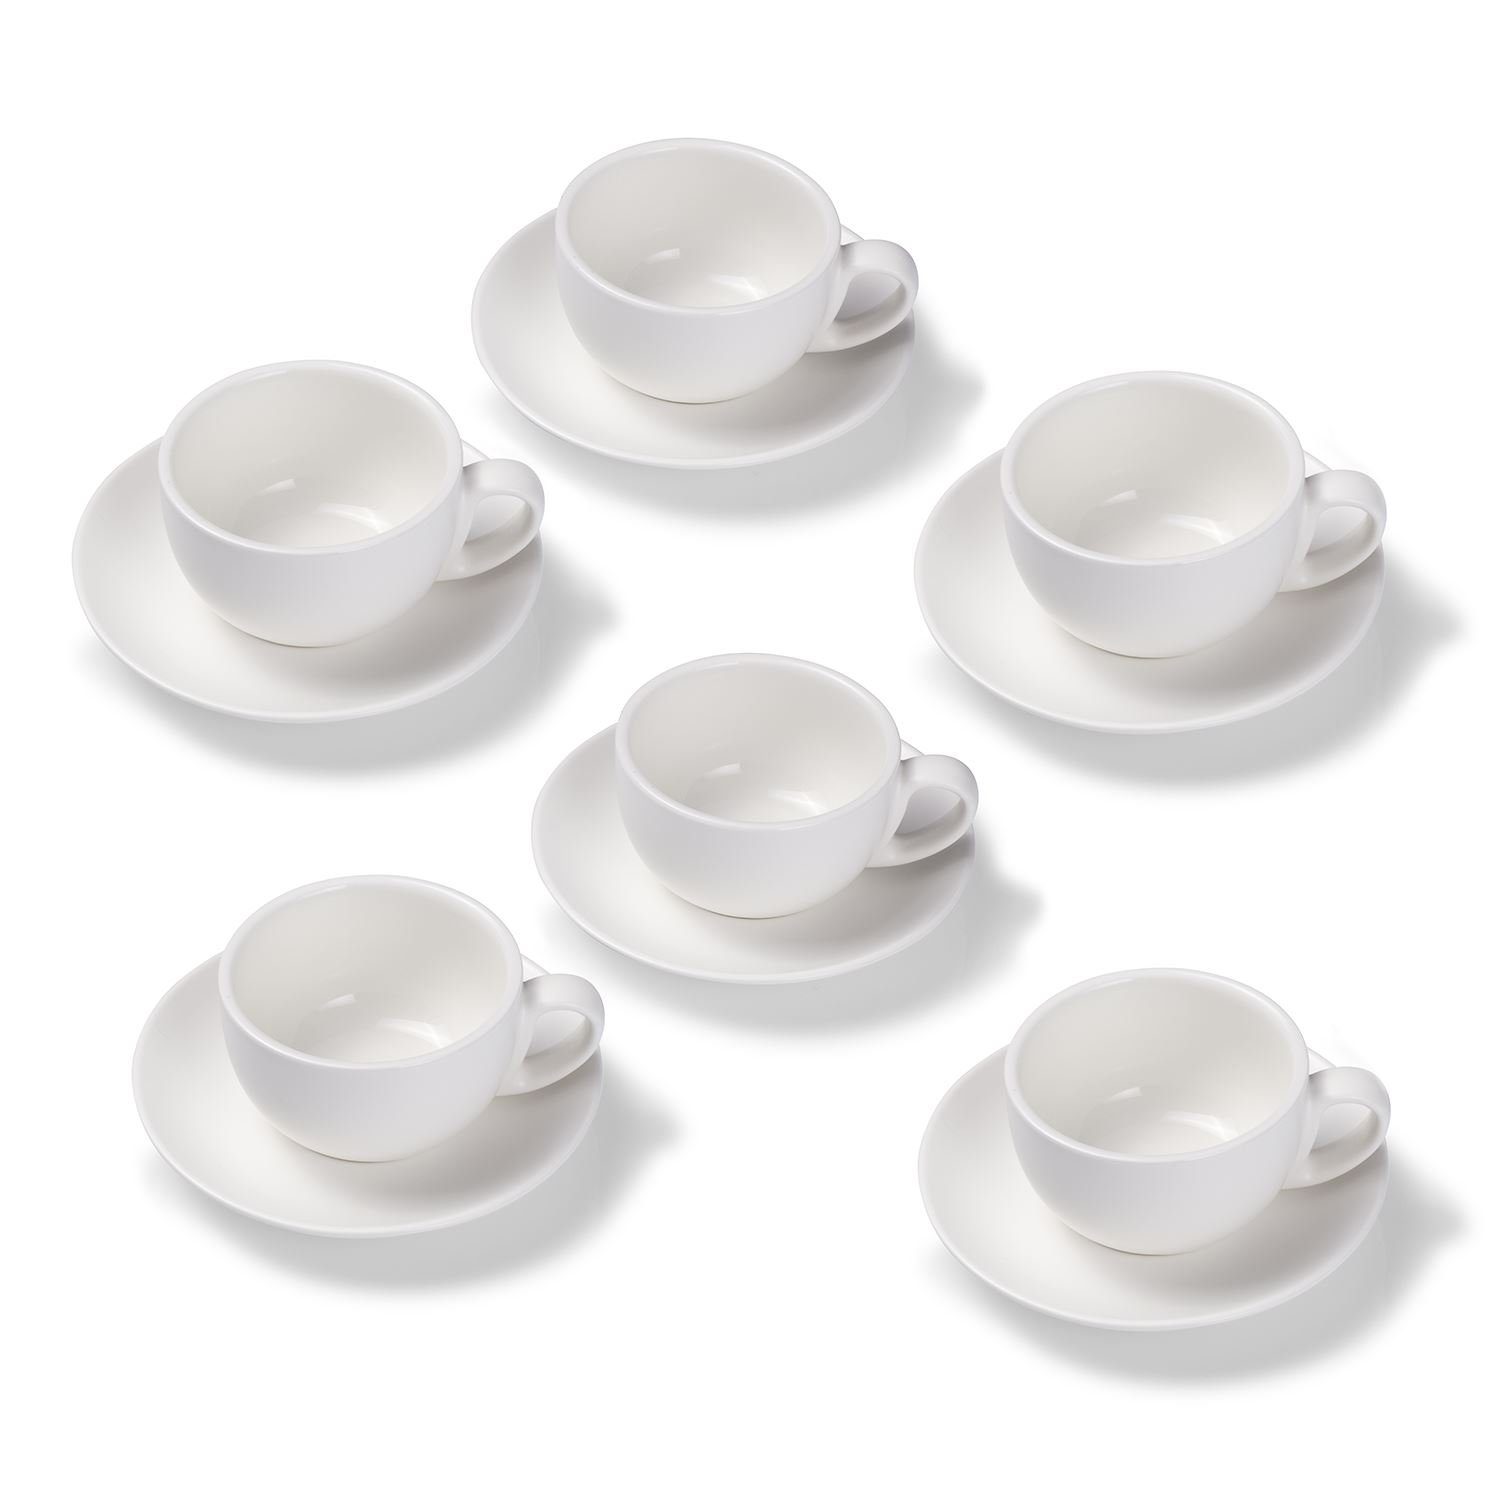 Terra Home Tasse Terra Home 6er Milchkaffeetassen-Set, Weiß matt, Porzellan | Tassen